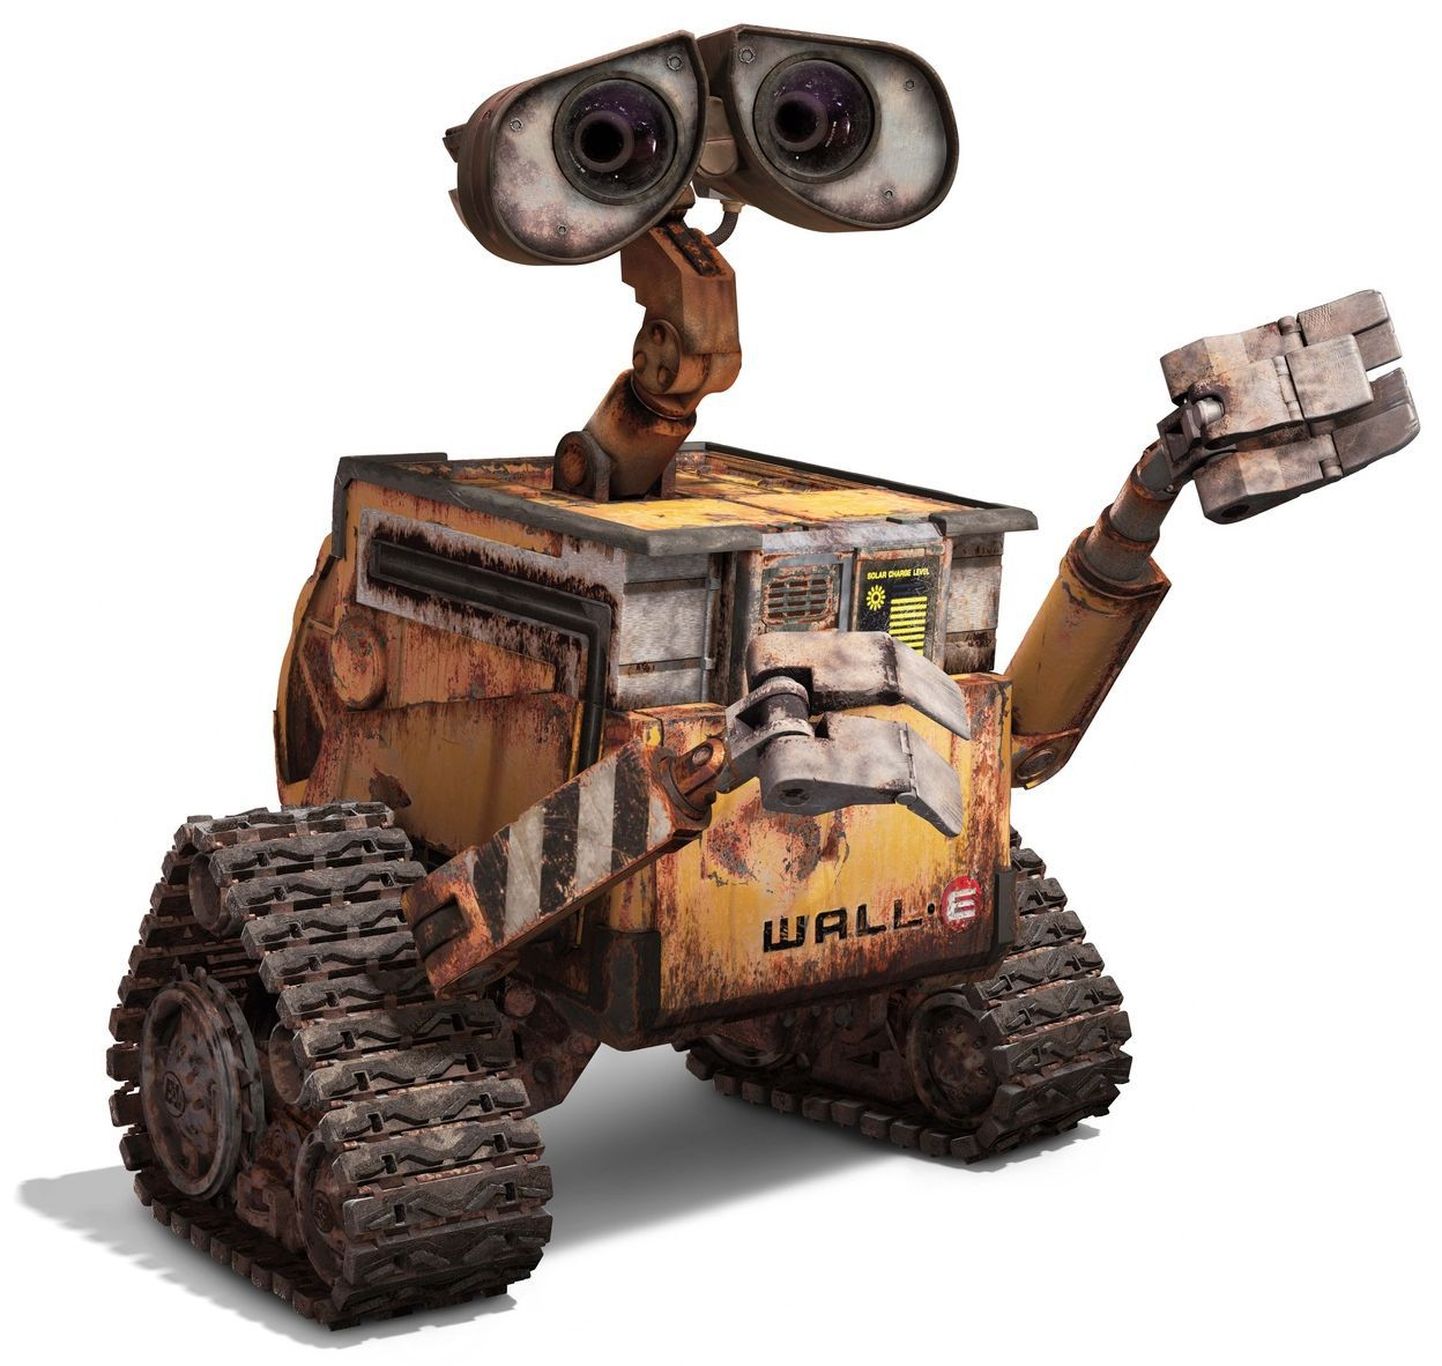 Pixari stuudio WALL-E robot